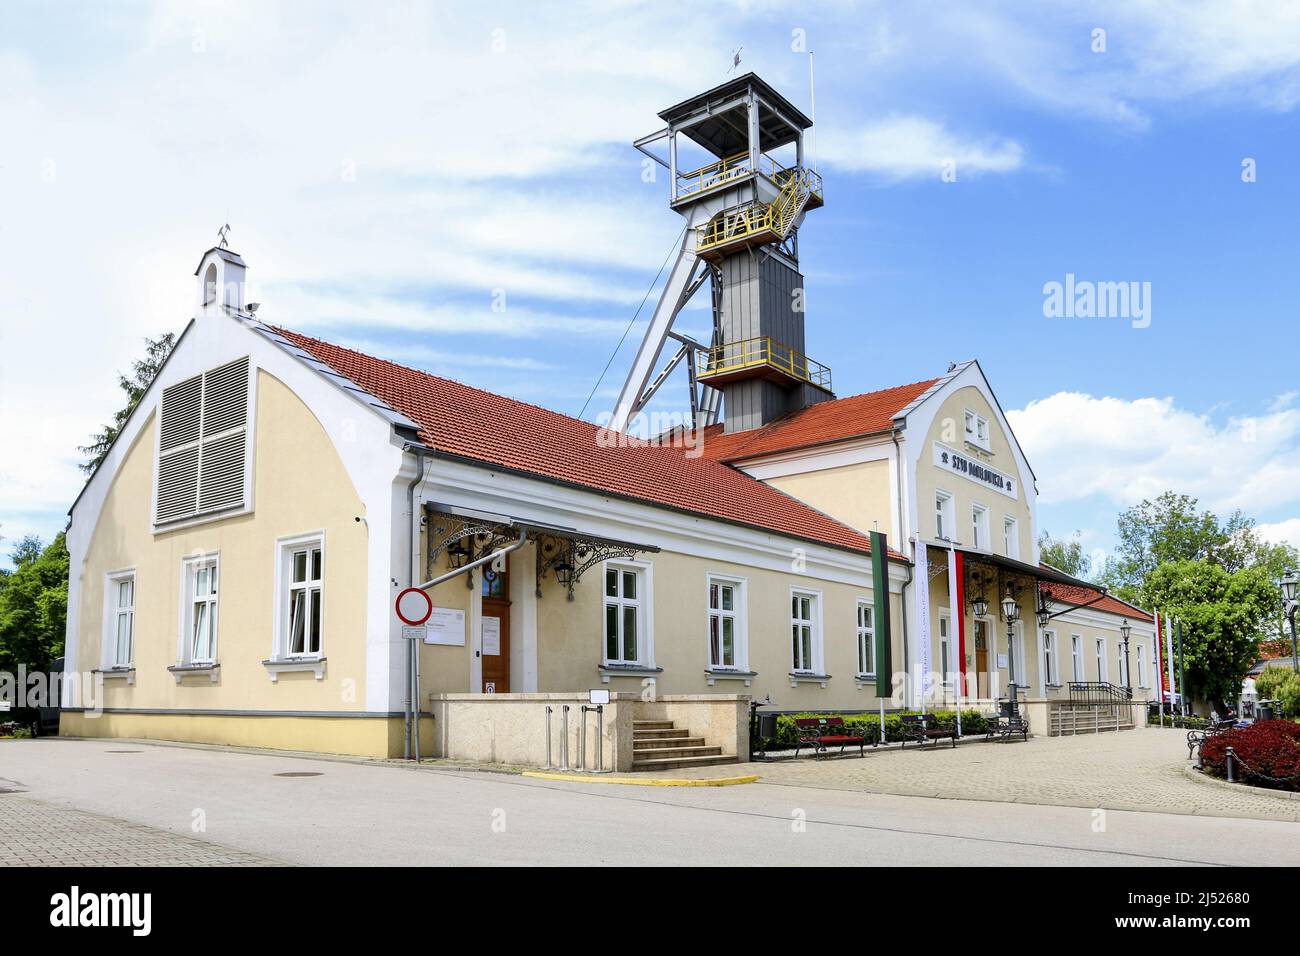 El eje de Danilowicz en la mina de sal de Wieliczka, Polonia. Foto de stock